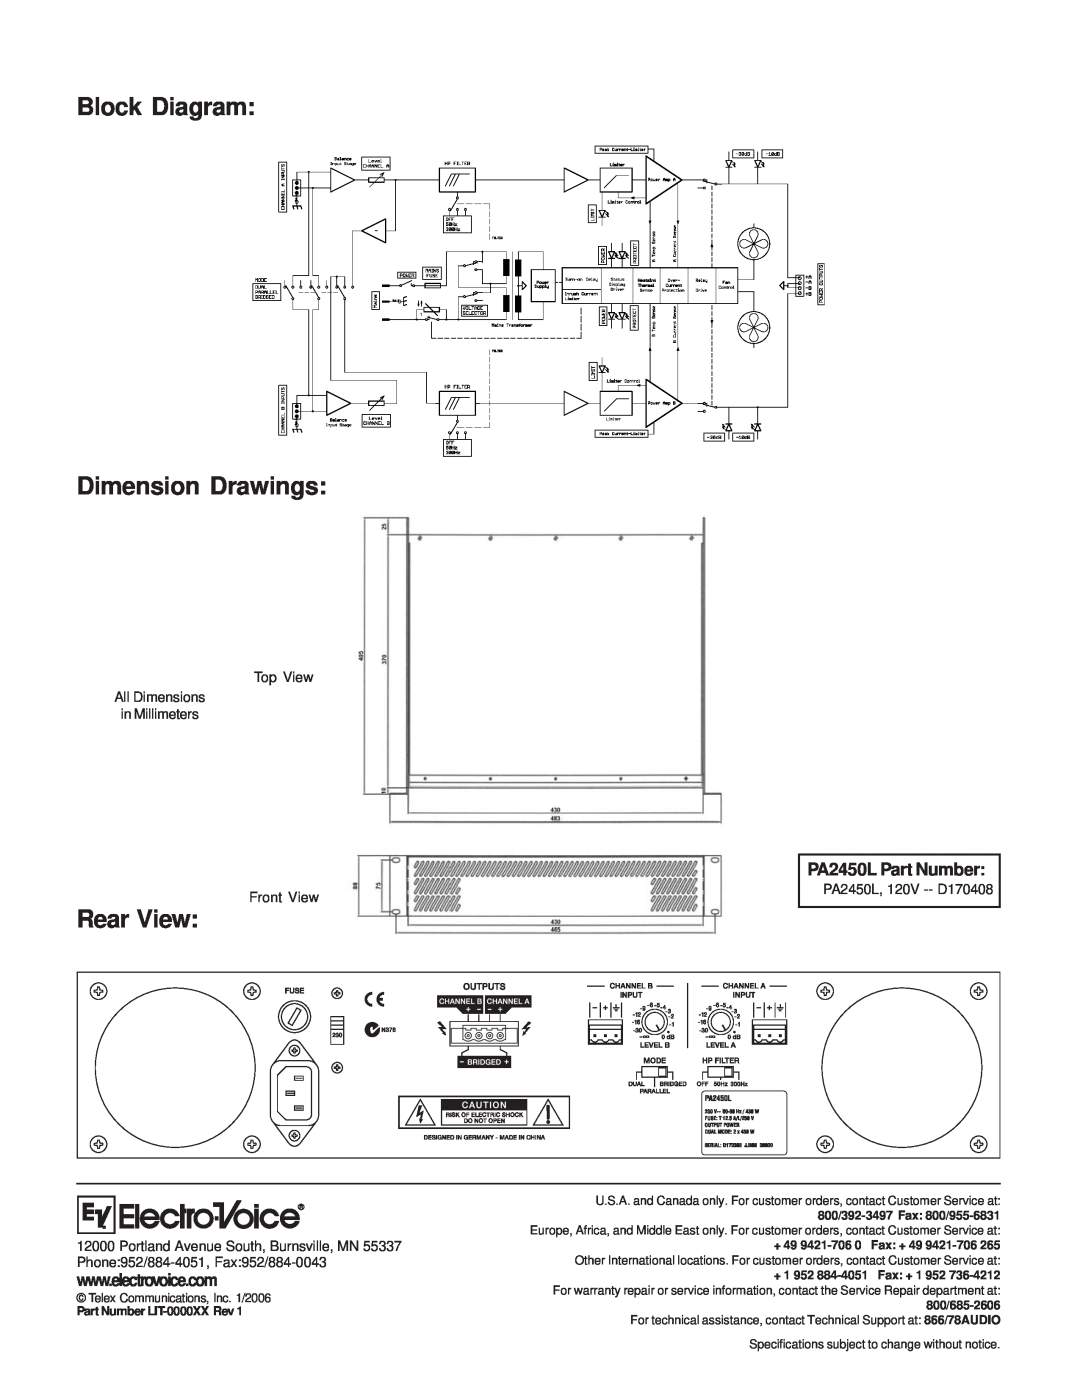 Electro-Voice Block Diagram Dimension Drawings, Rear View, PA2450L Part Number, Telex Communications, Inc. 1/2006 